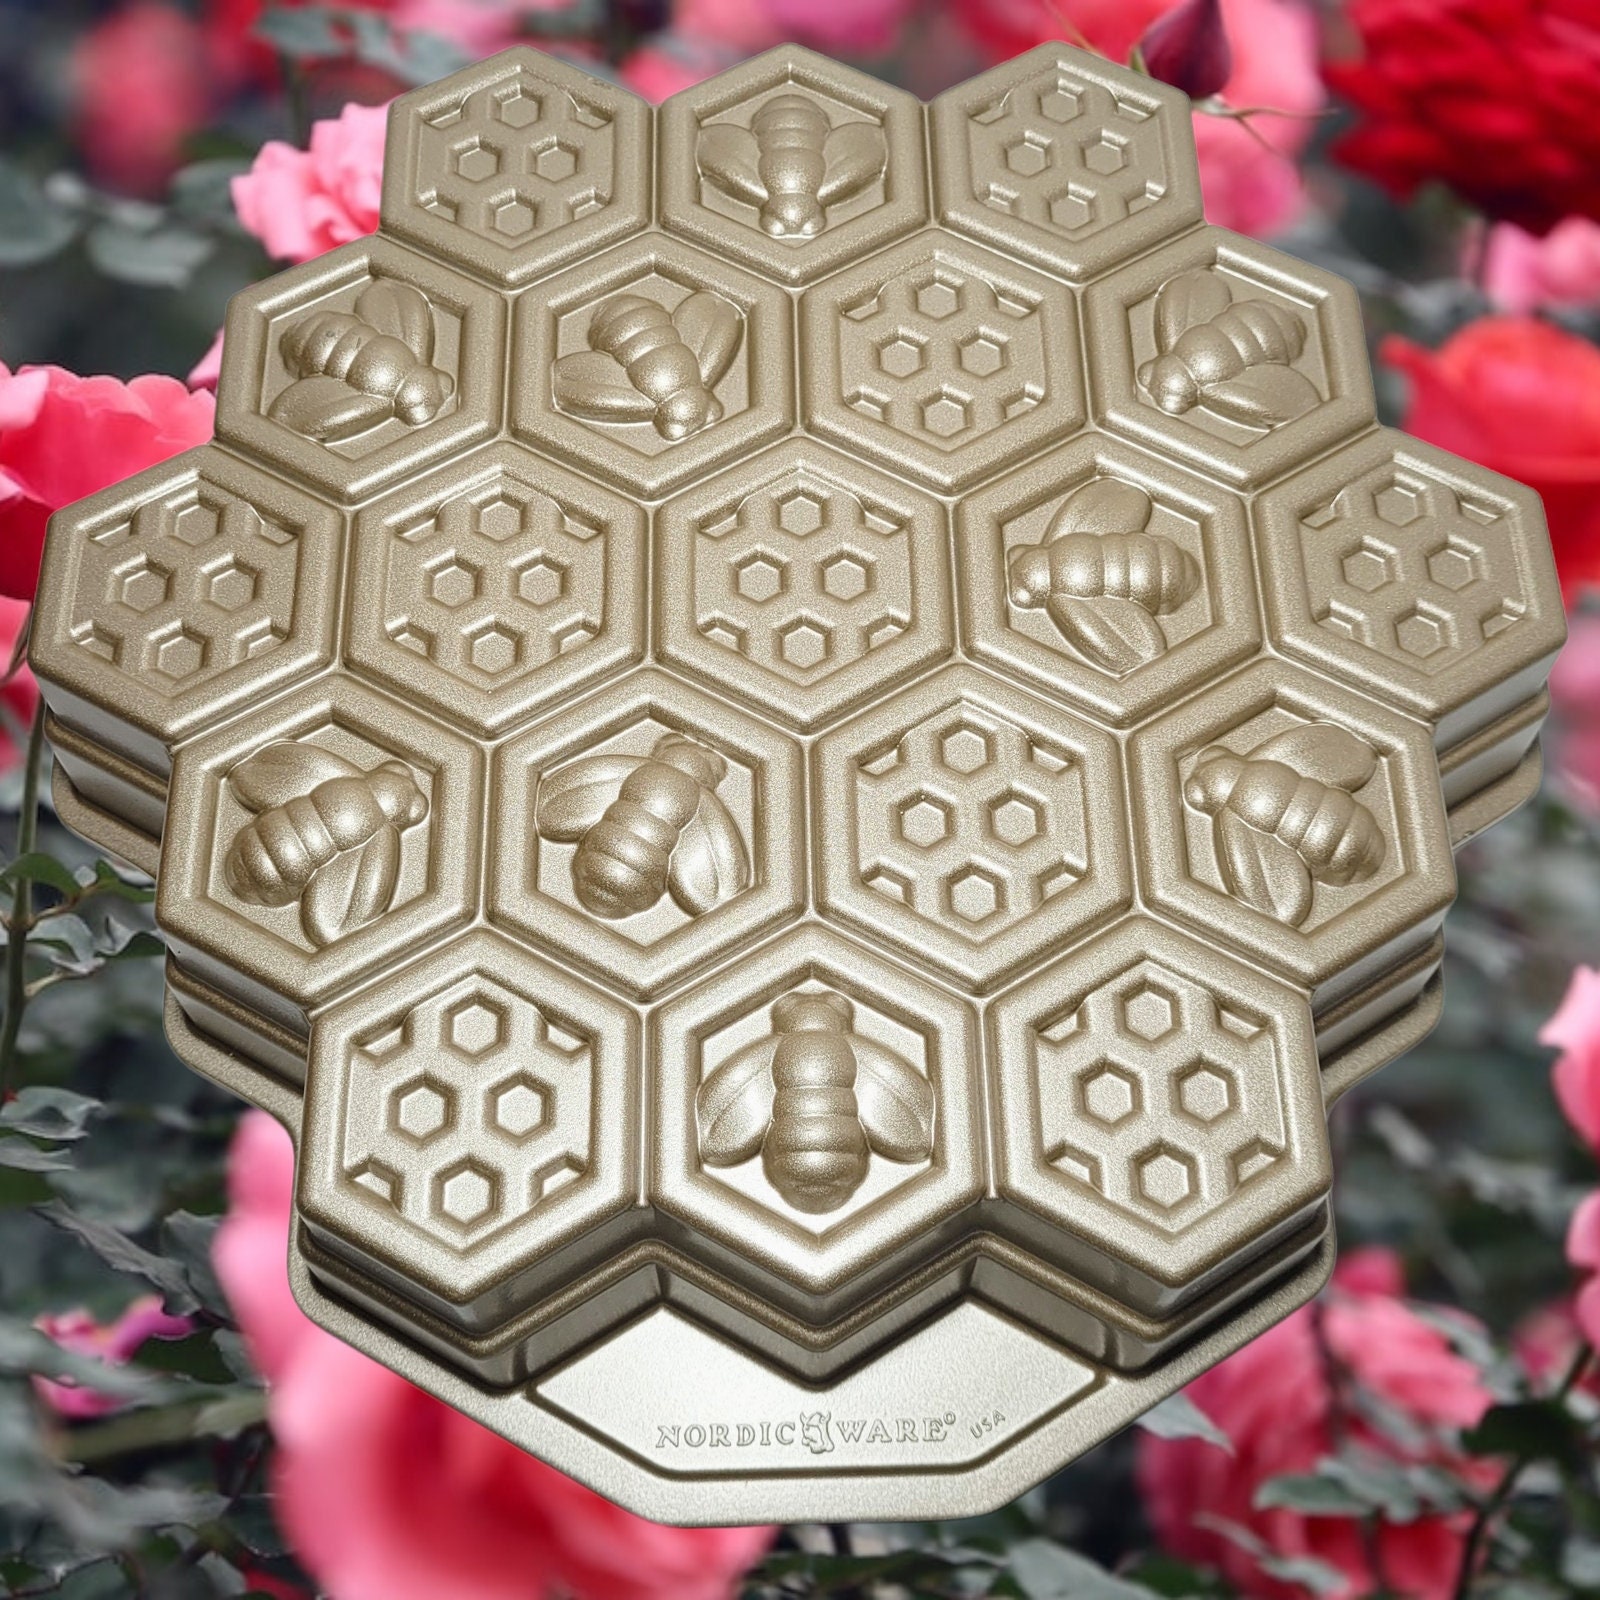 Nordic Ware Honeycomb Pull-Apart Pan, Gold